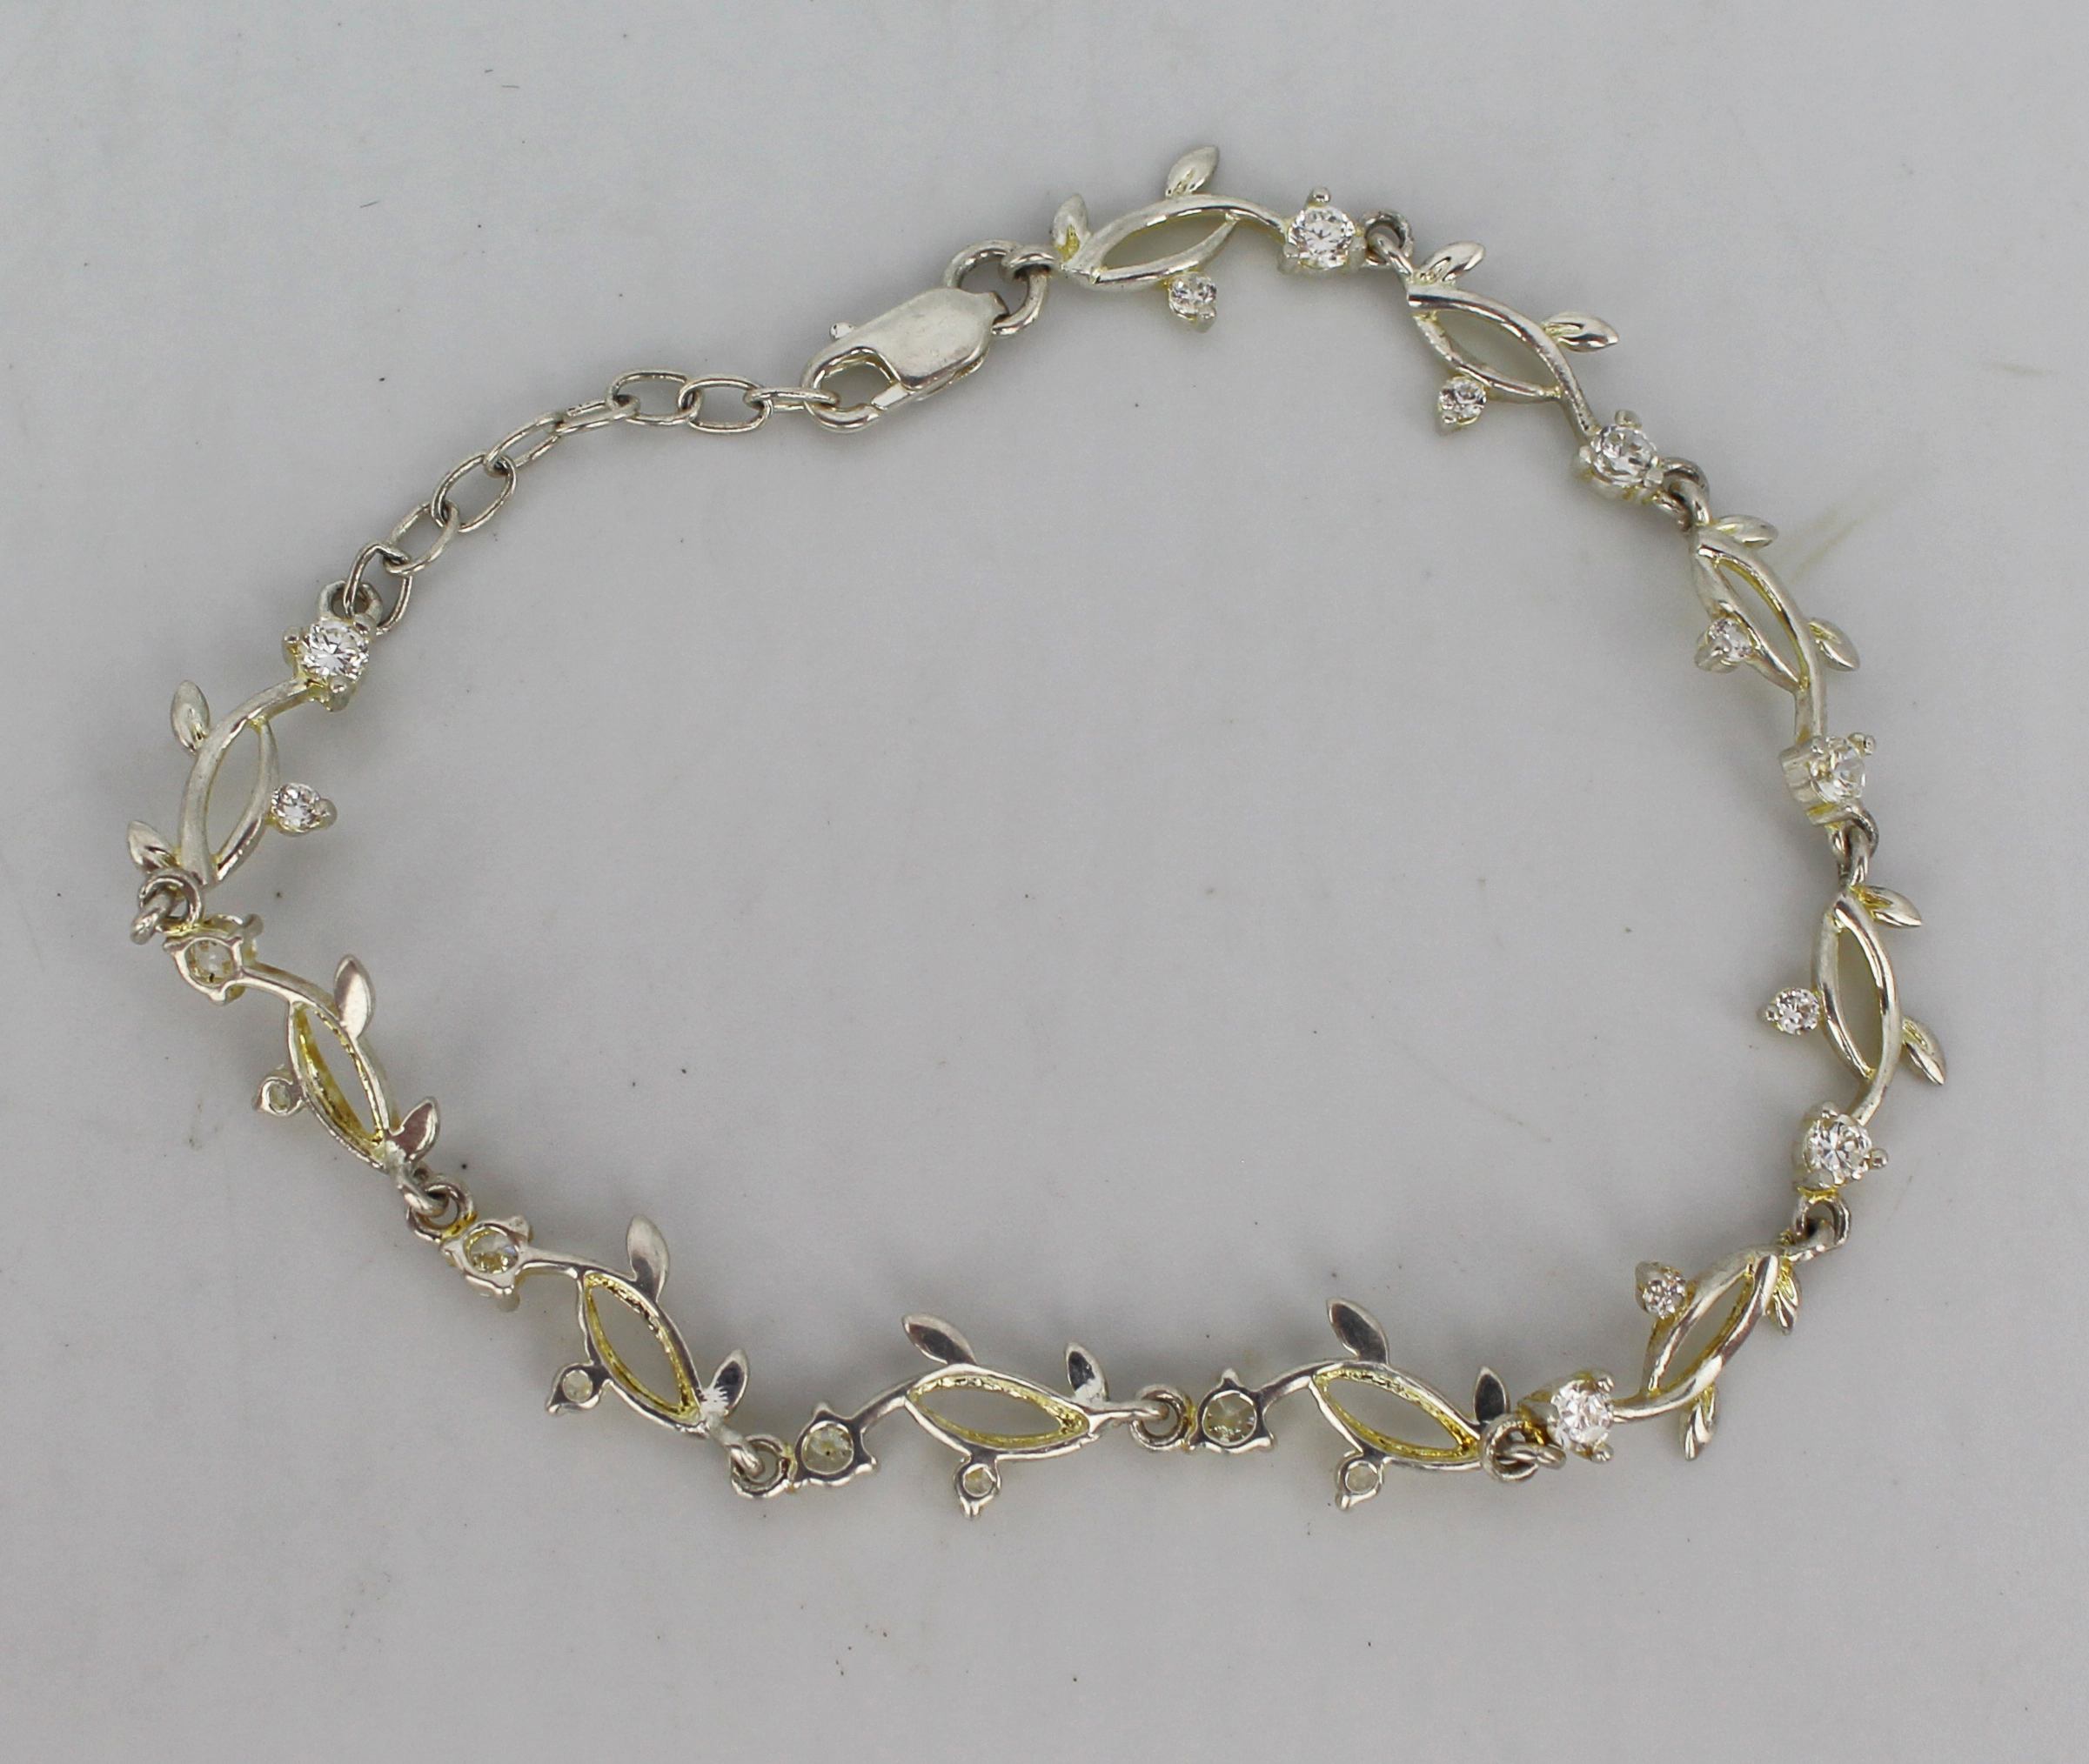 Decorative Silver Gemstone Set Bracelet - Image 2 of 3